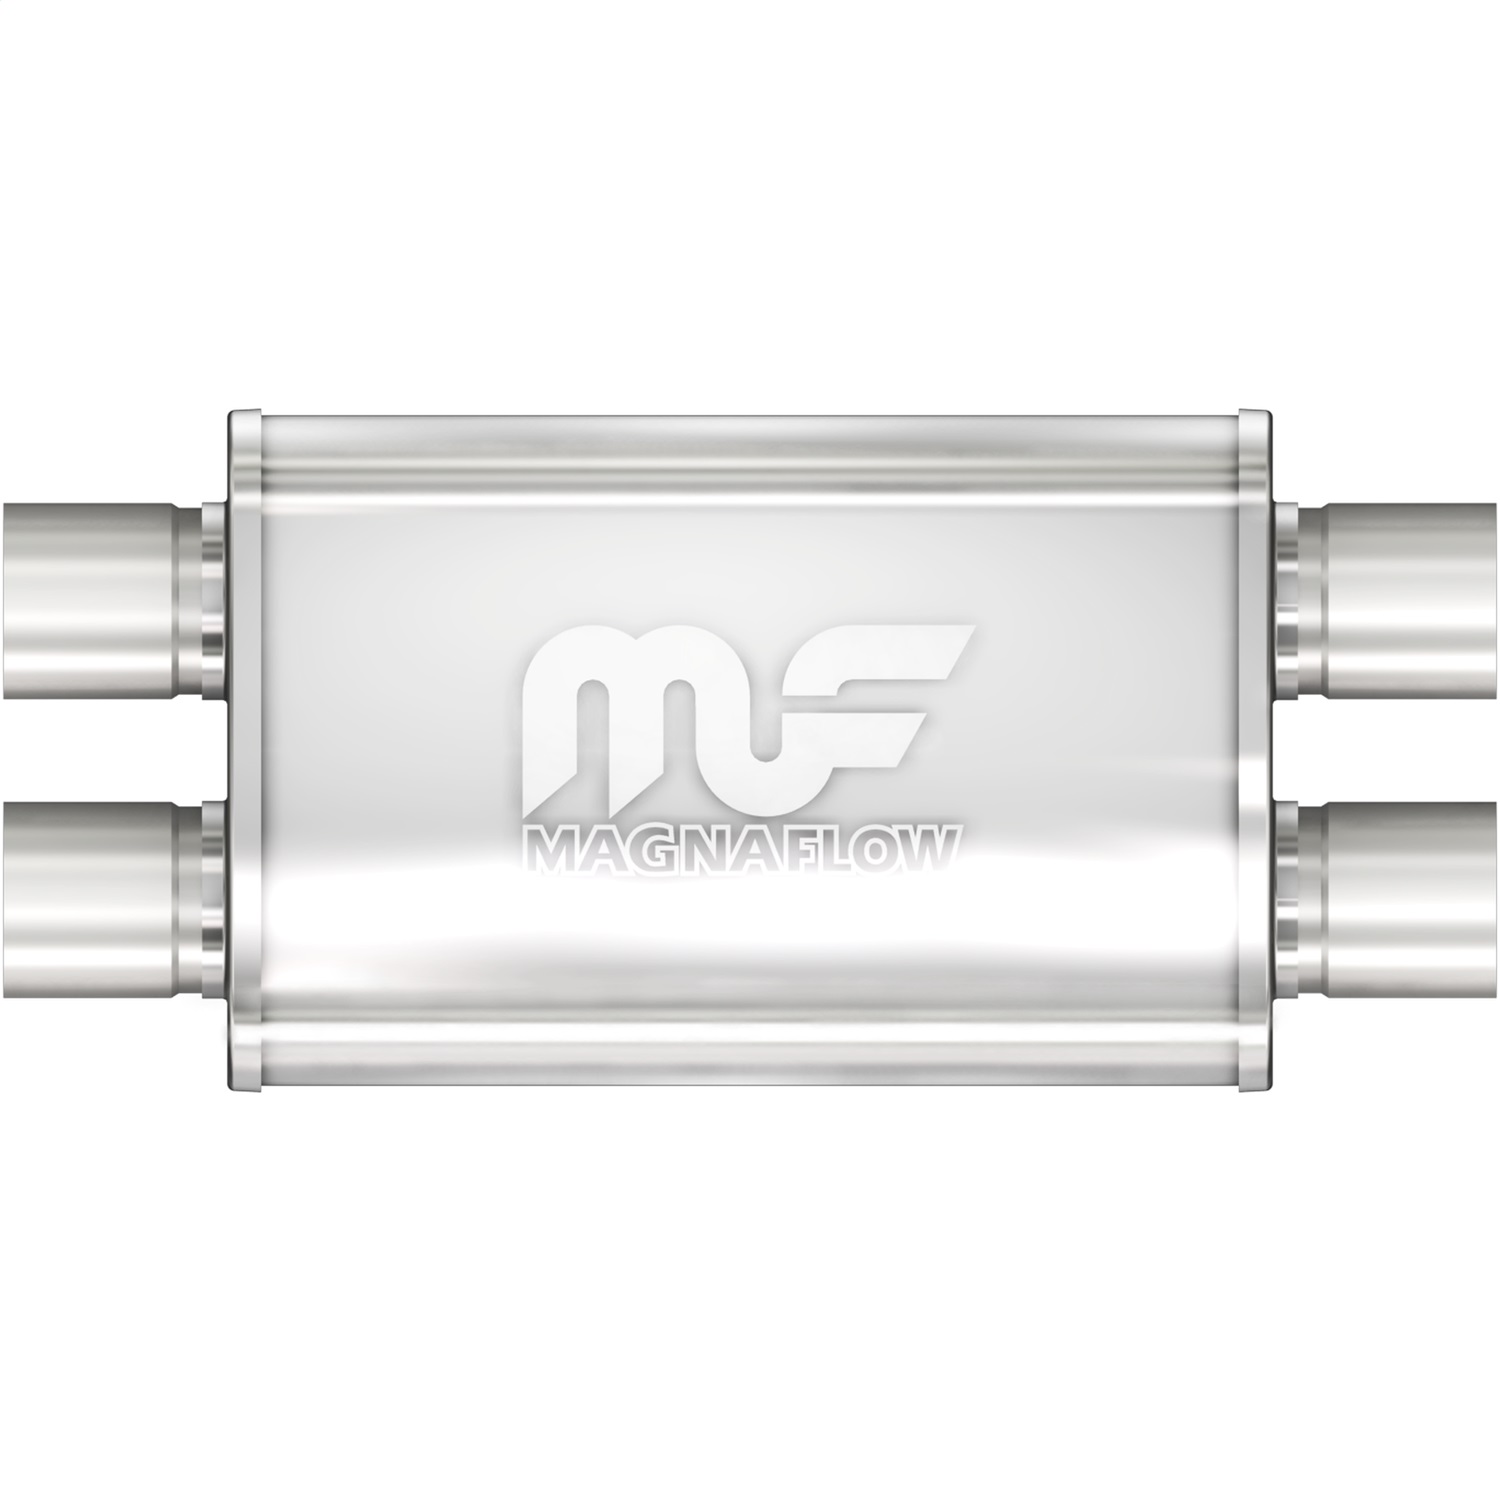 Magnaflow Performance Exhaust Magnaflow Performance Exhaust 14378 Stainless Steel Muffler